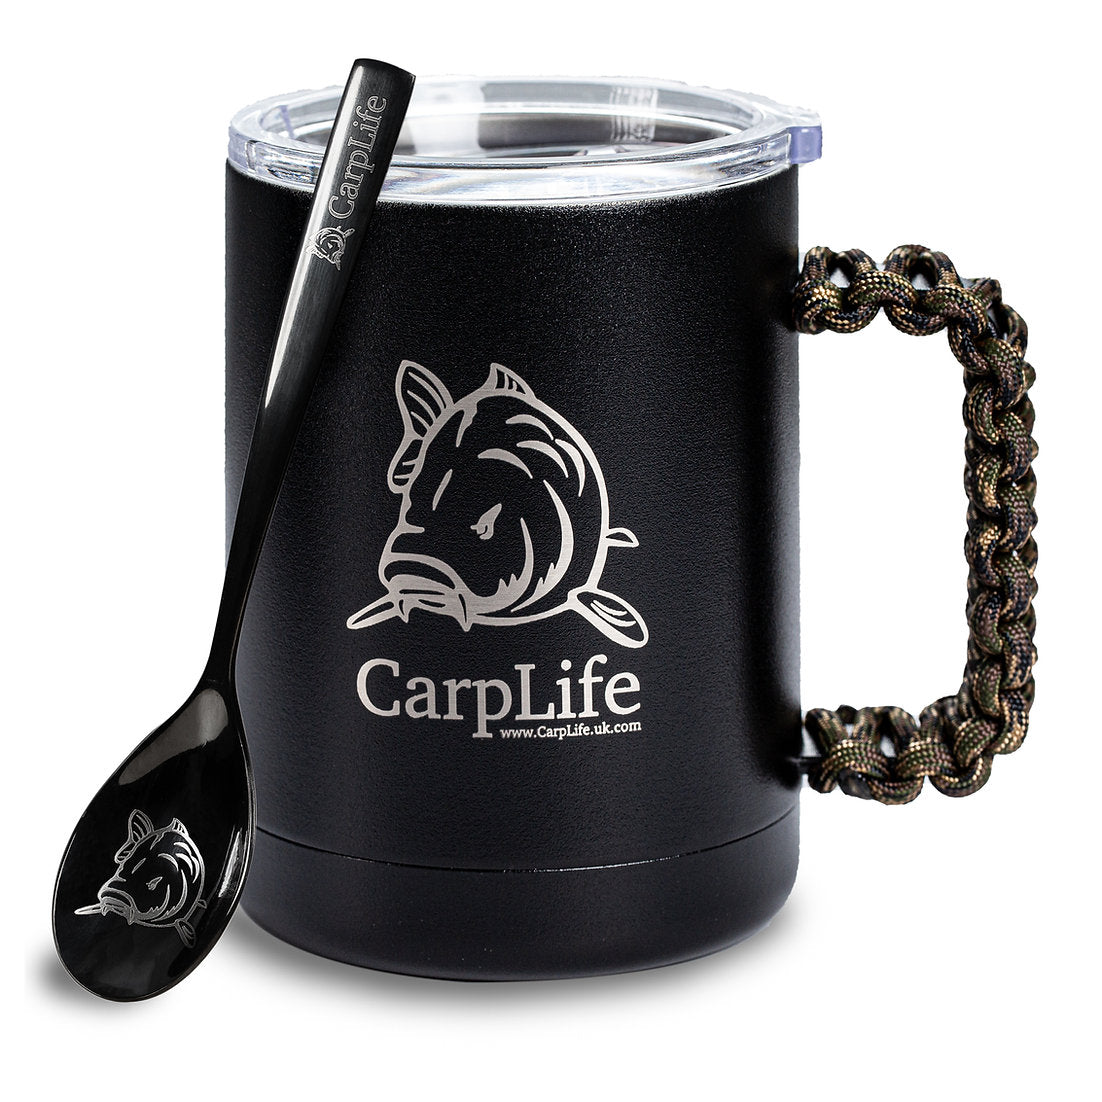 CarpLife Thermal Mug & Carpy Spoon